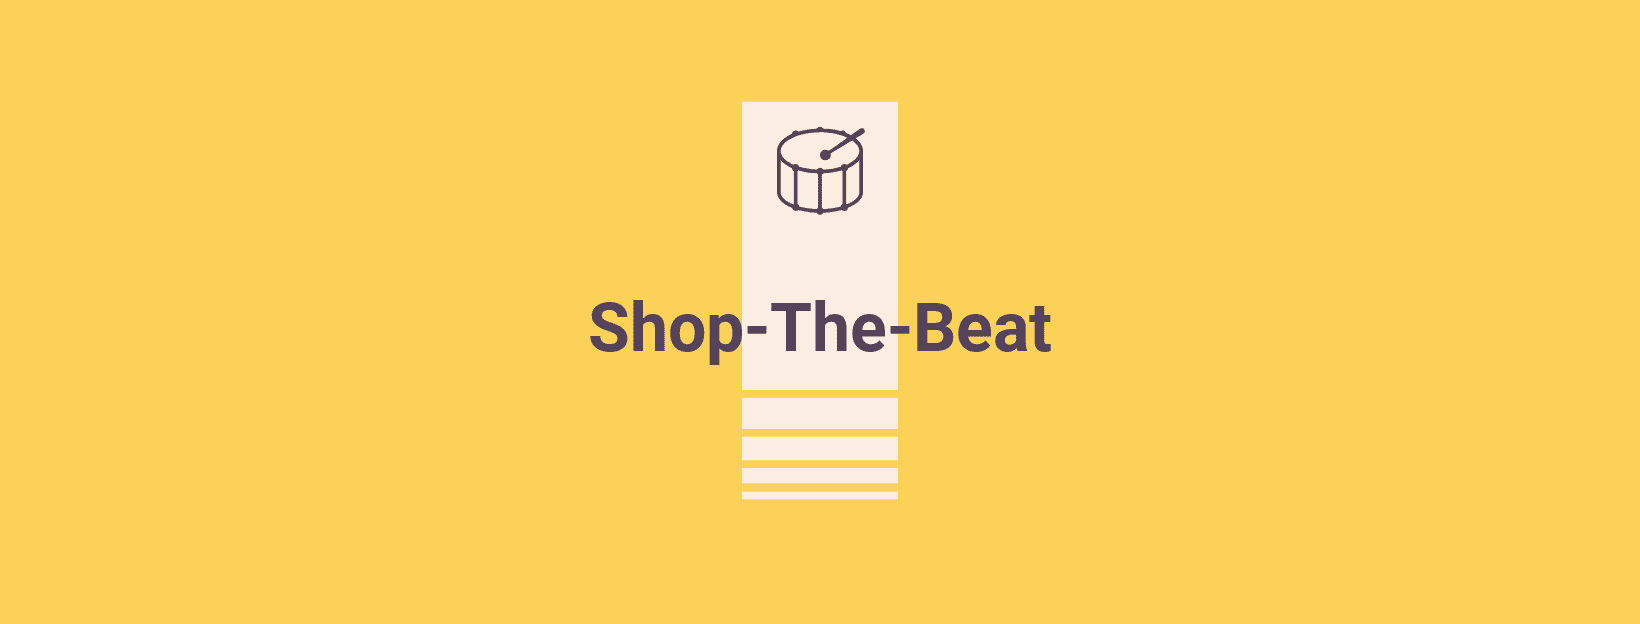 Shop the beat logo